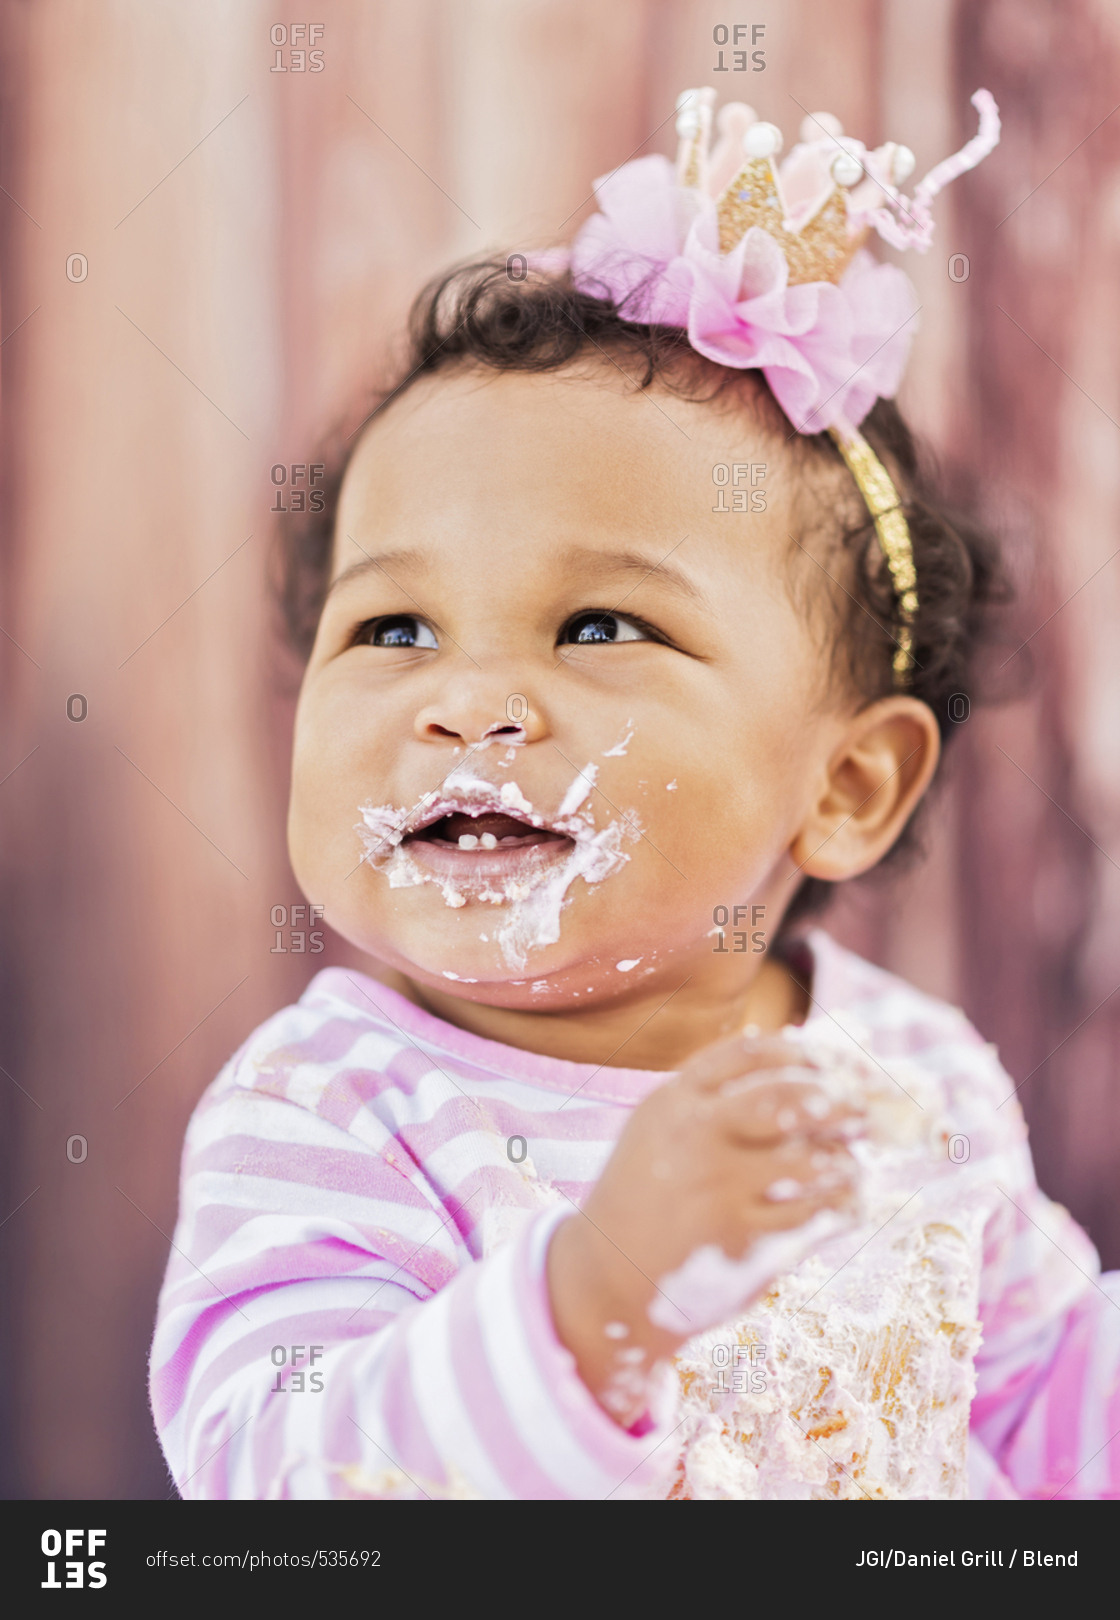 Messy Mixed Race baby eating birthday cake